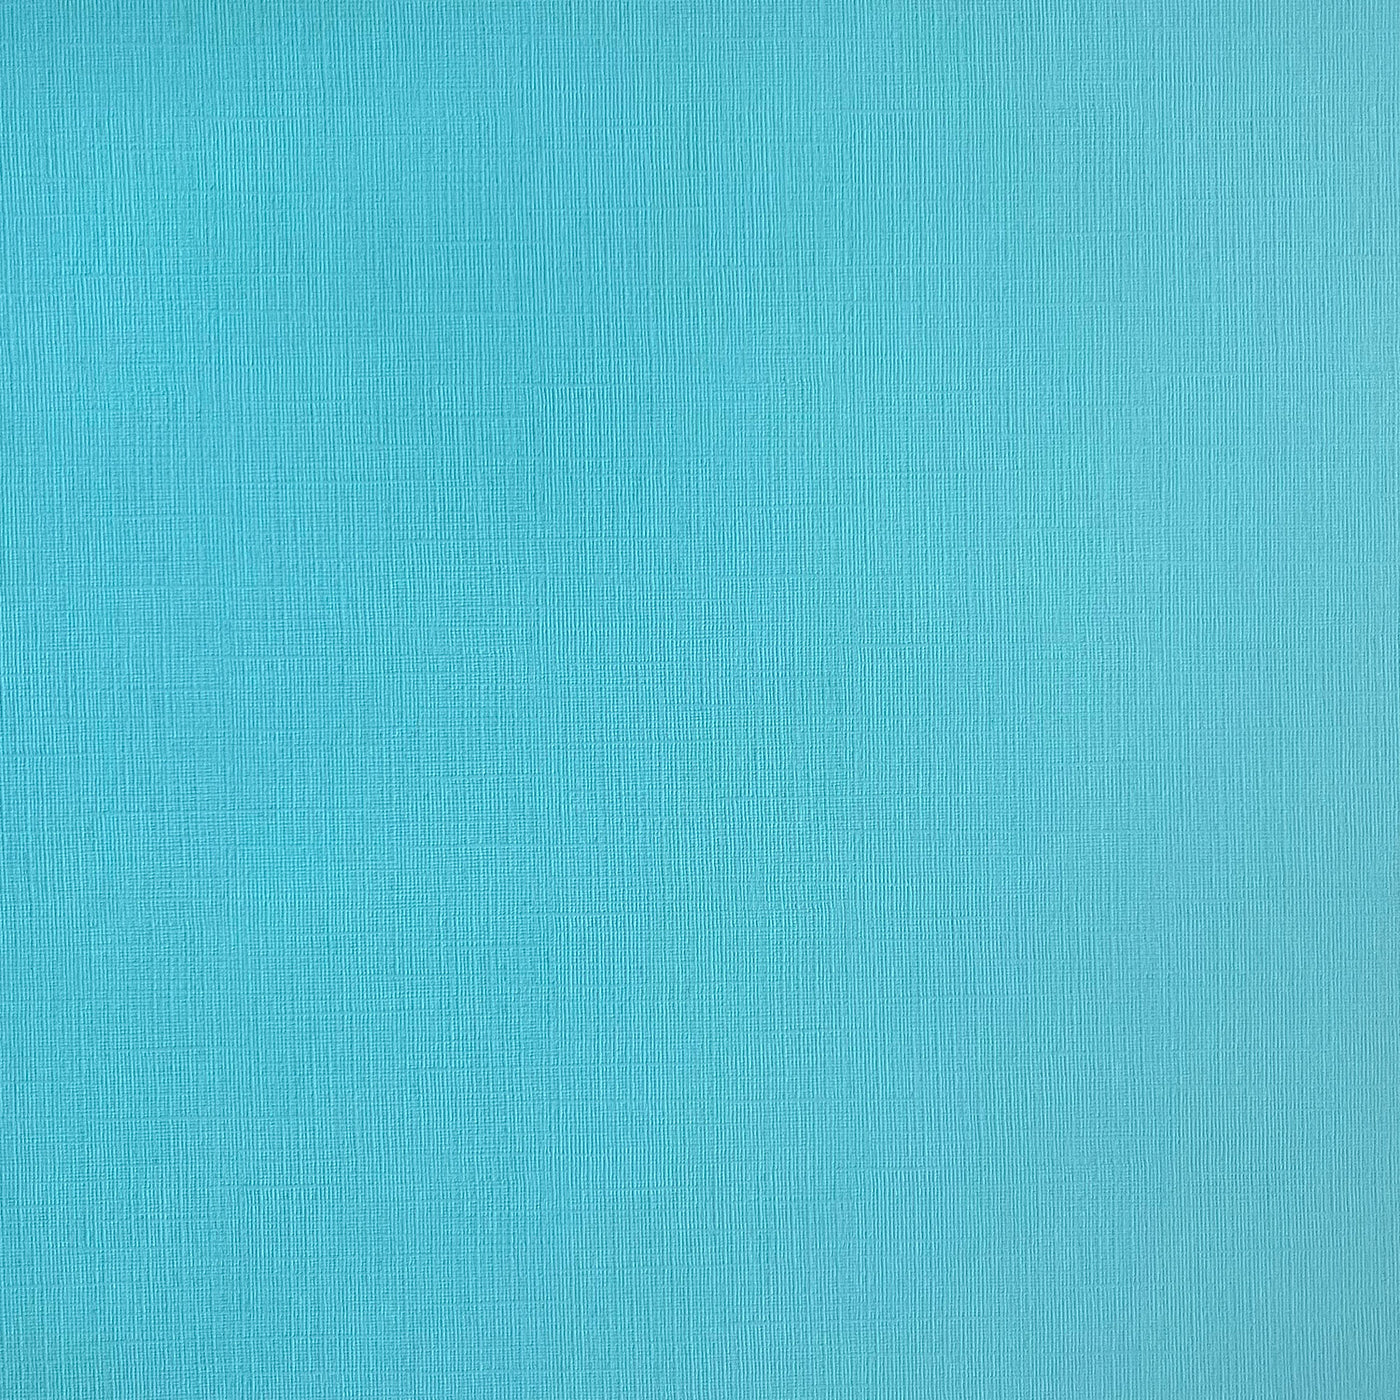 Atlantic Shore - Textured 12x12 Cardstock - ice blue canvas scrapbook paper